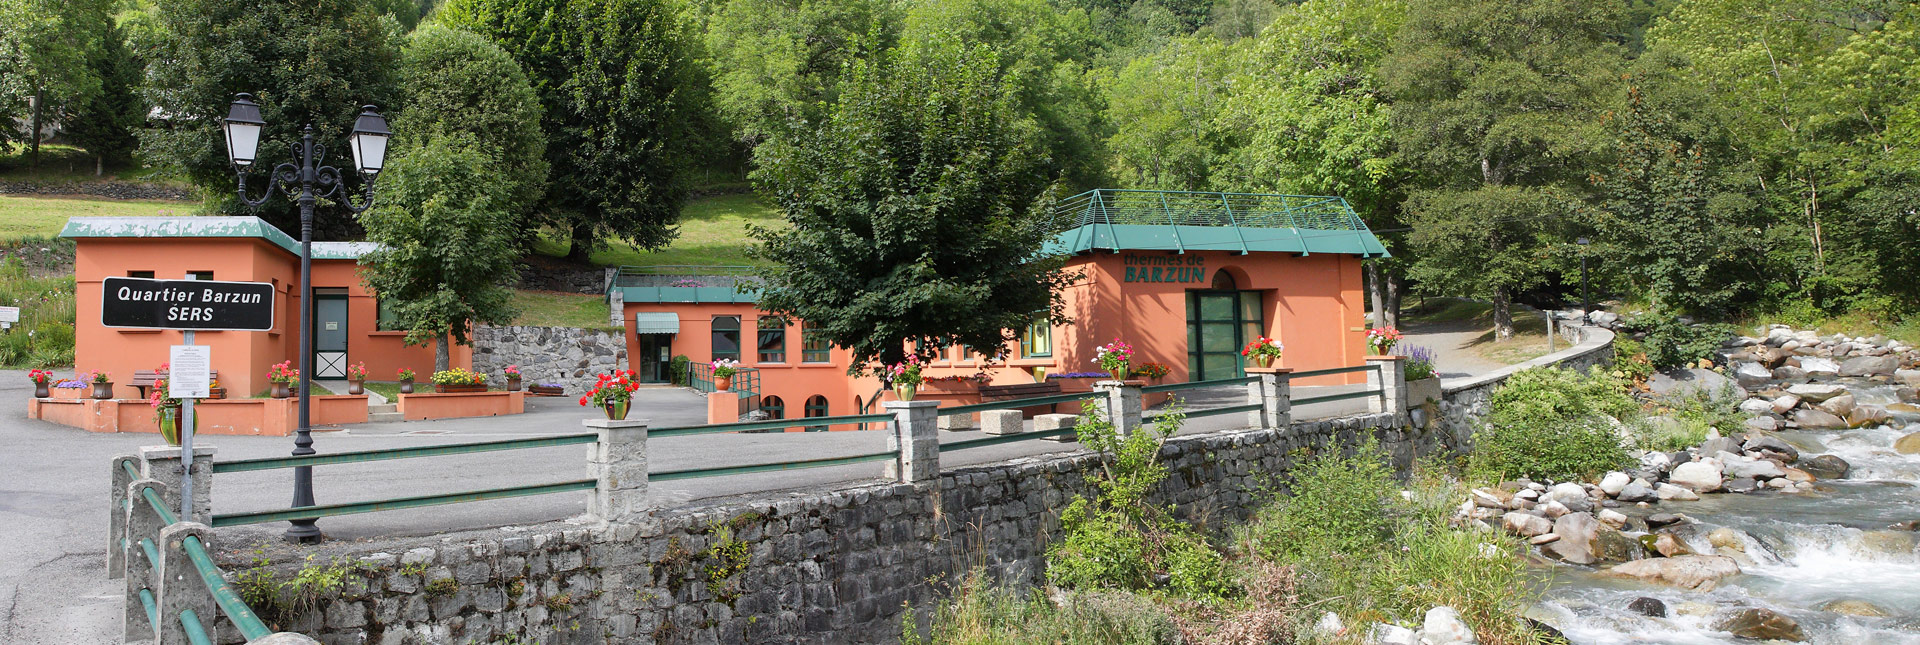 Station thermale de Barèges-Barzun